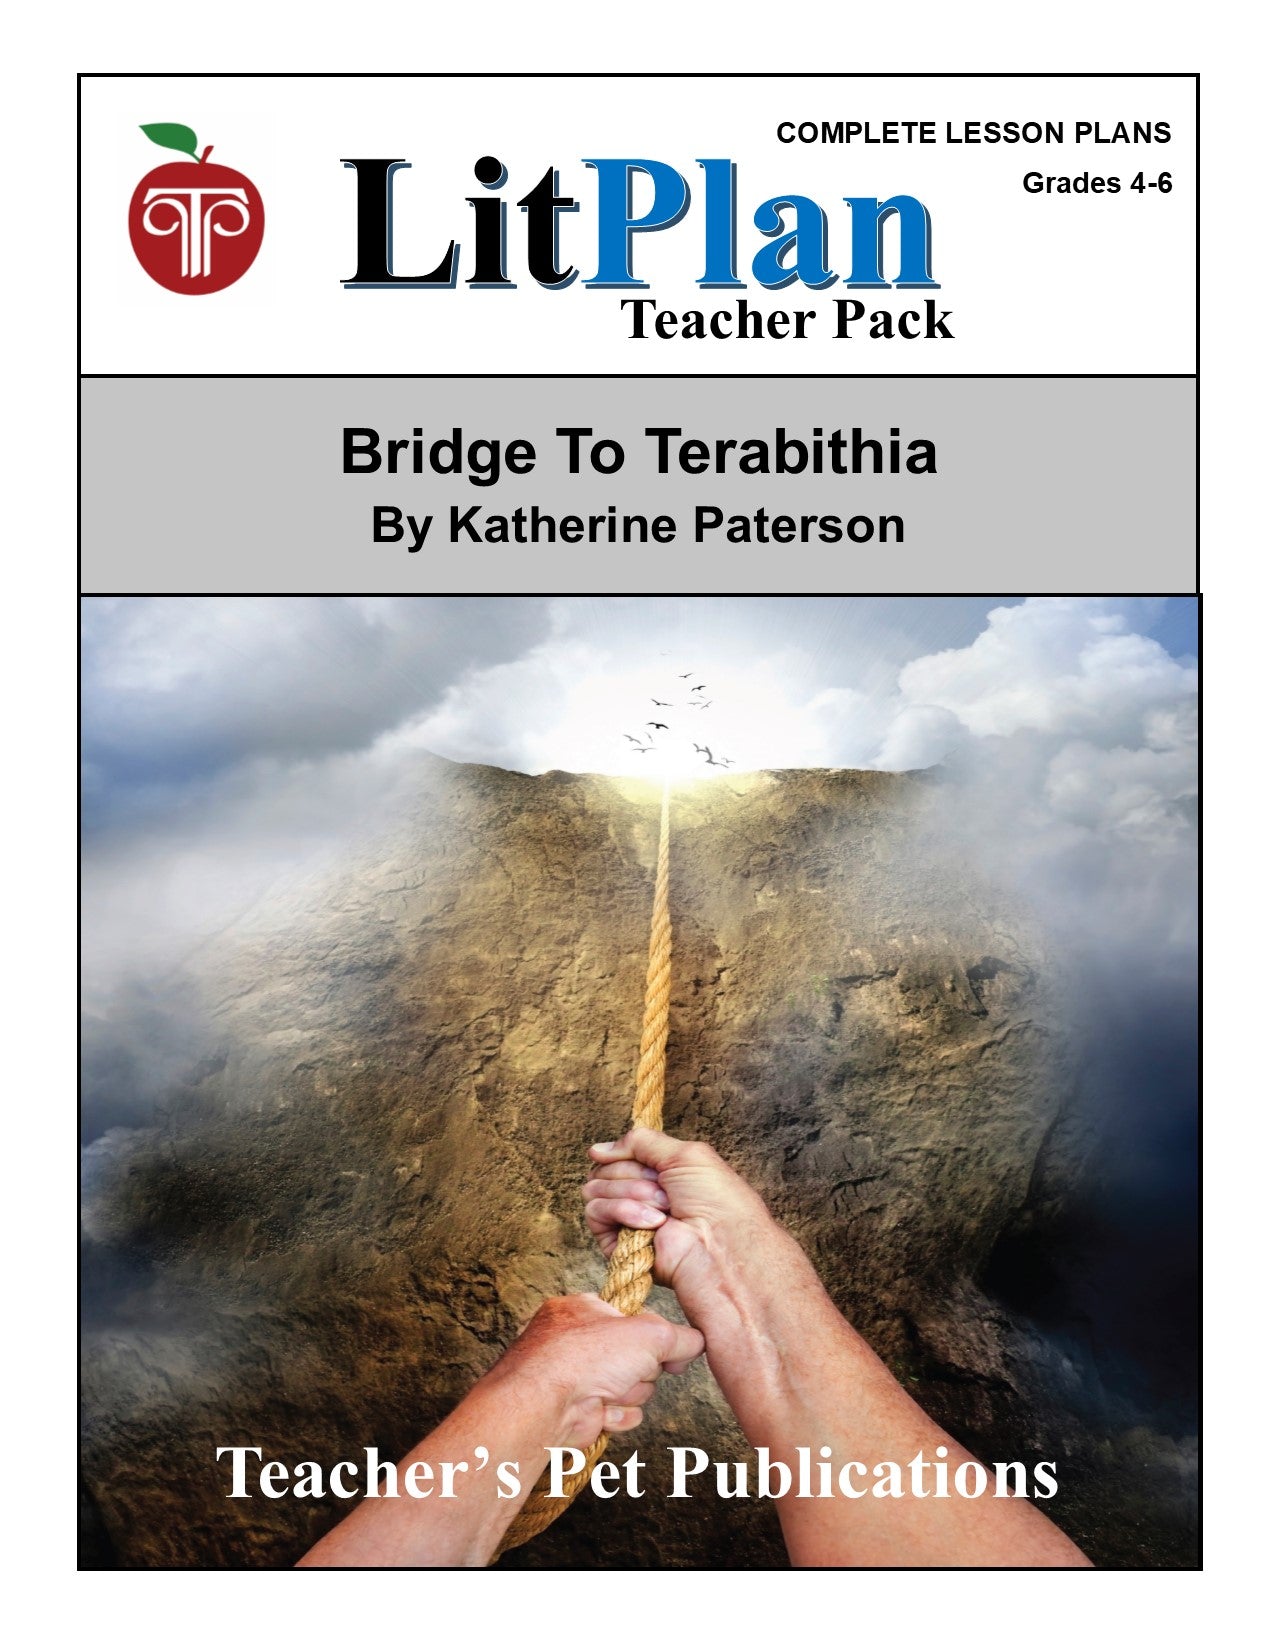 Bridge to Terabithia: LitPlan Teacher Pack Grades 4-6